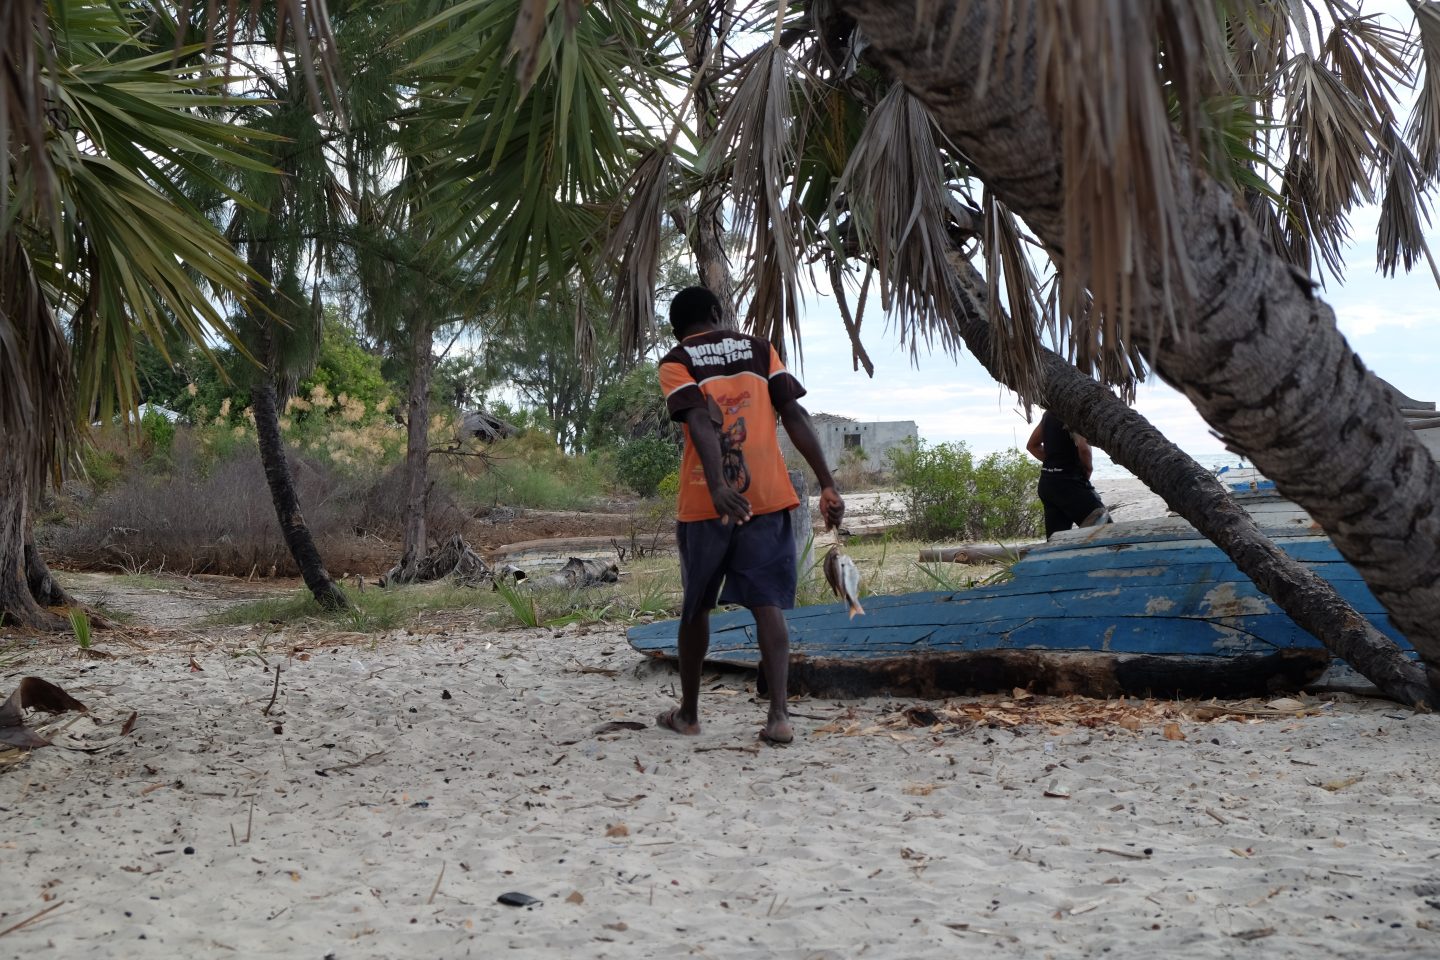 A Madagascan fishermen walks along the beach